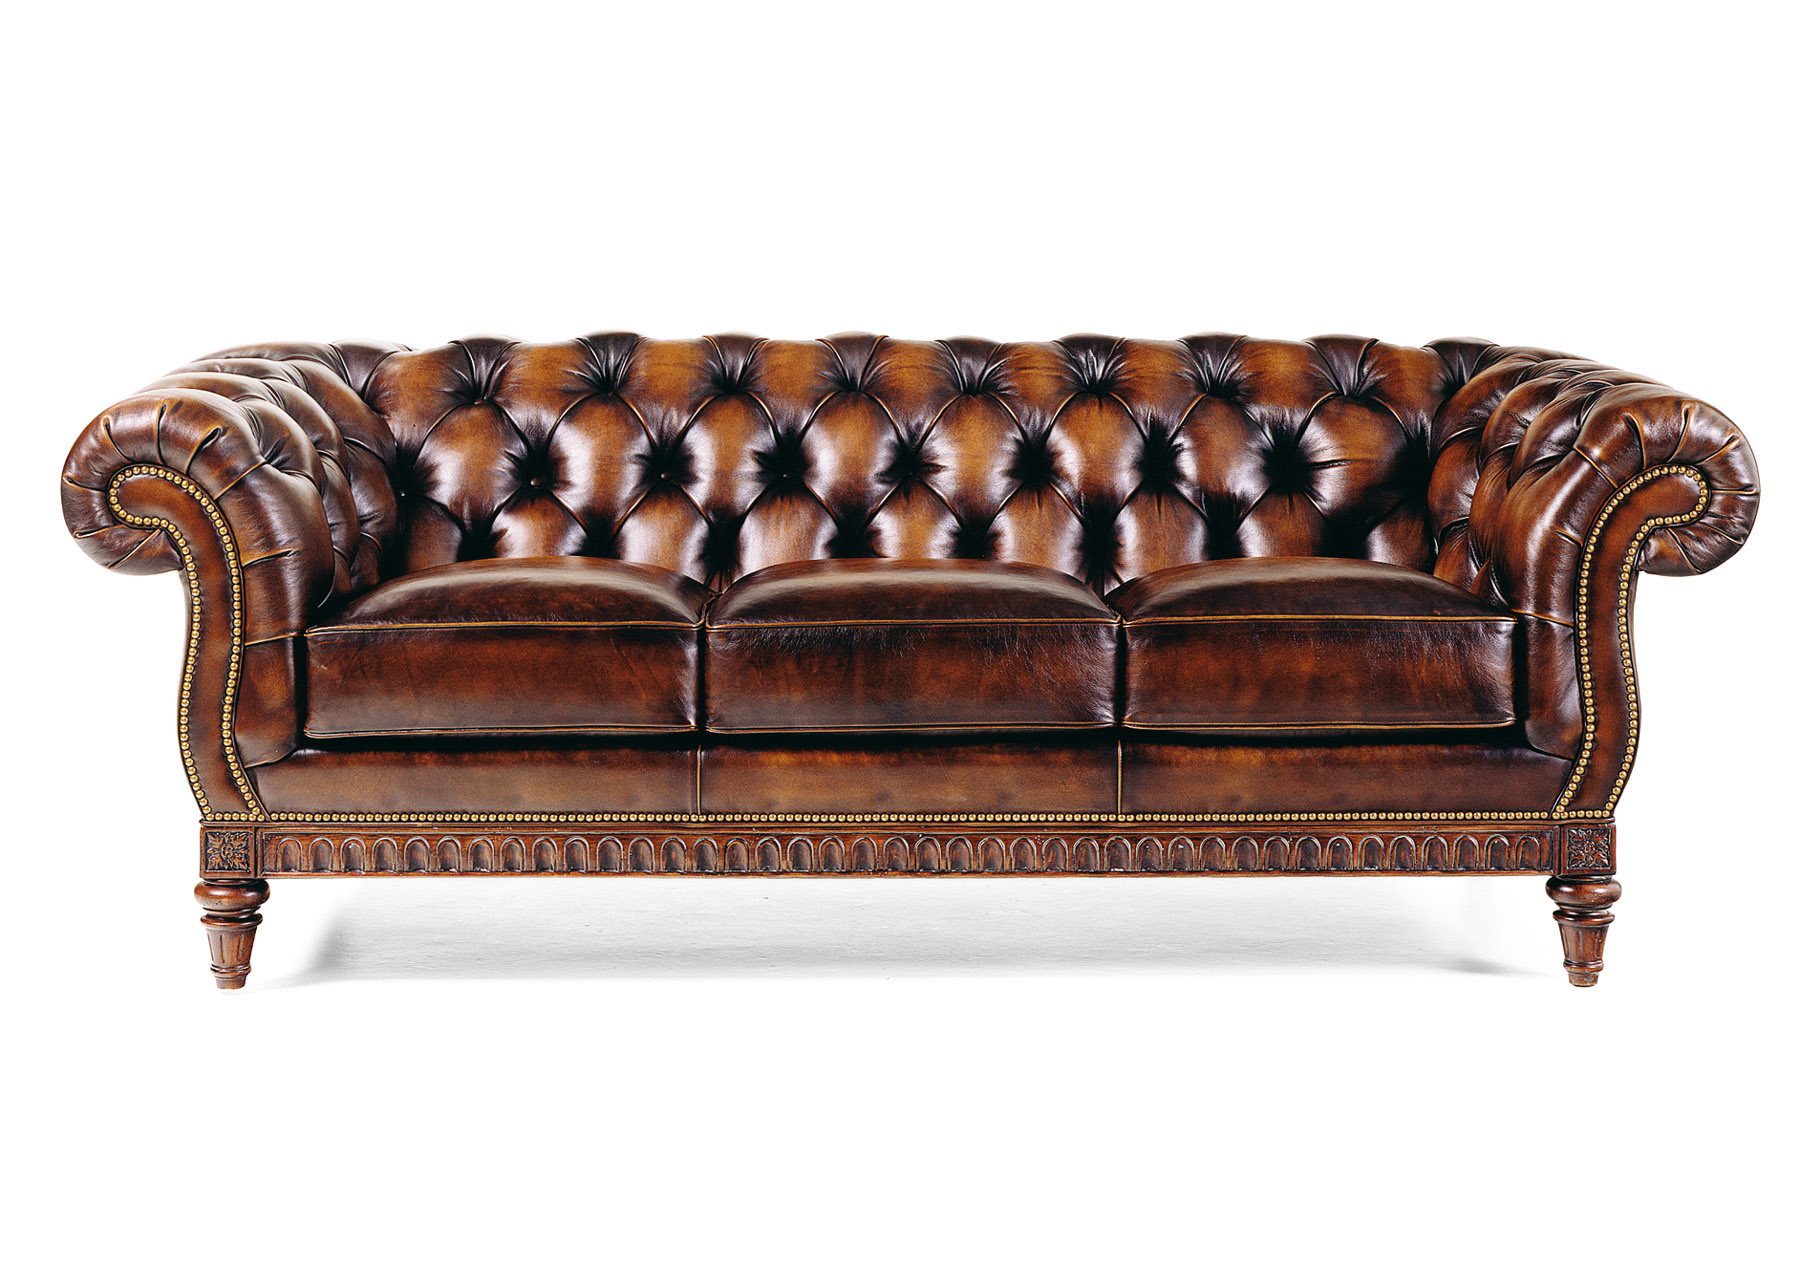 Cabot Wrenn Legends Chancellor Lounge Sofa